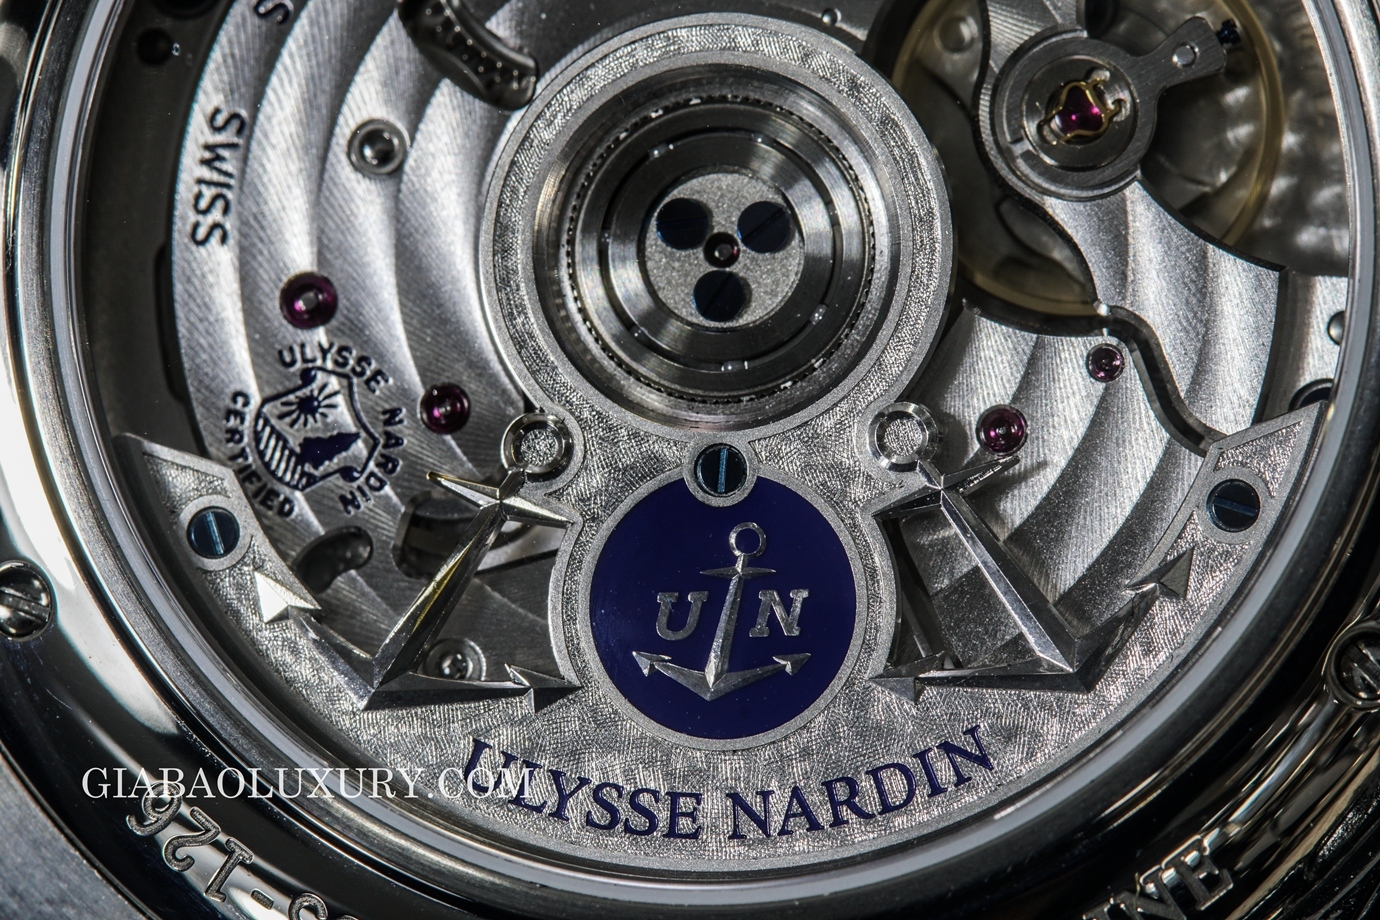 đồng hồ ulysse nardin marine chronometer